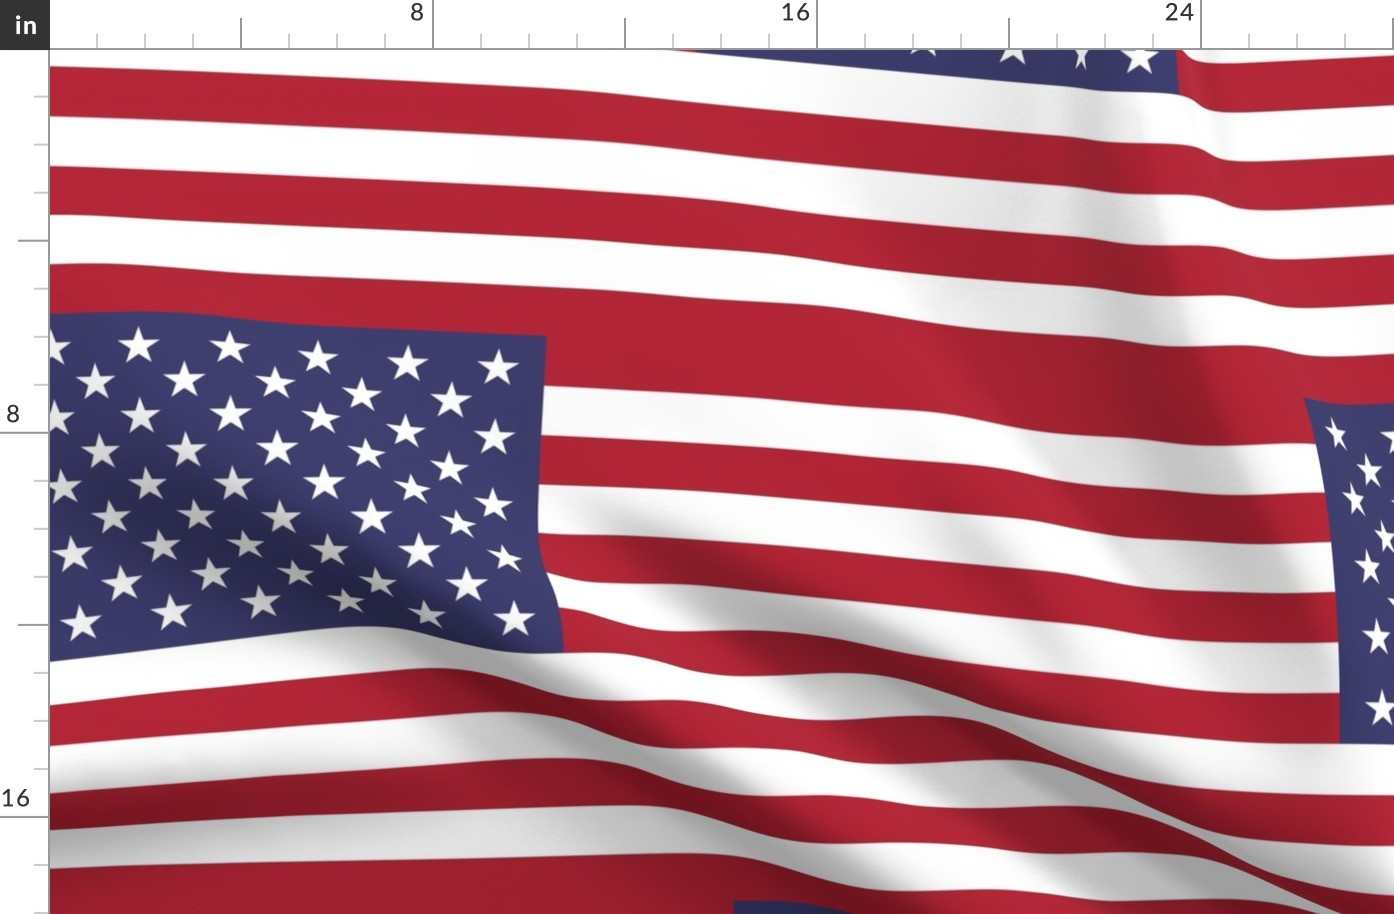 United States of America flag - large